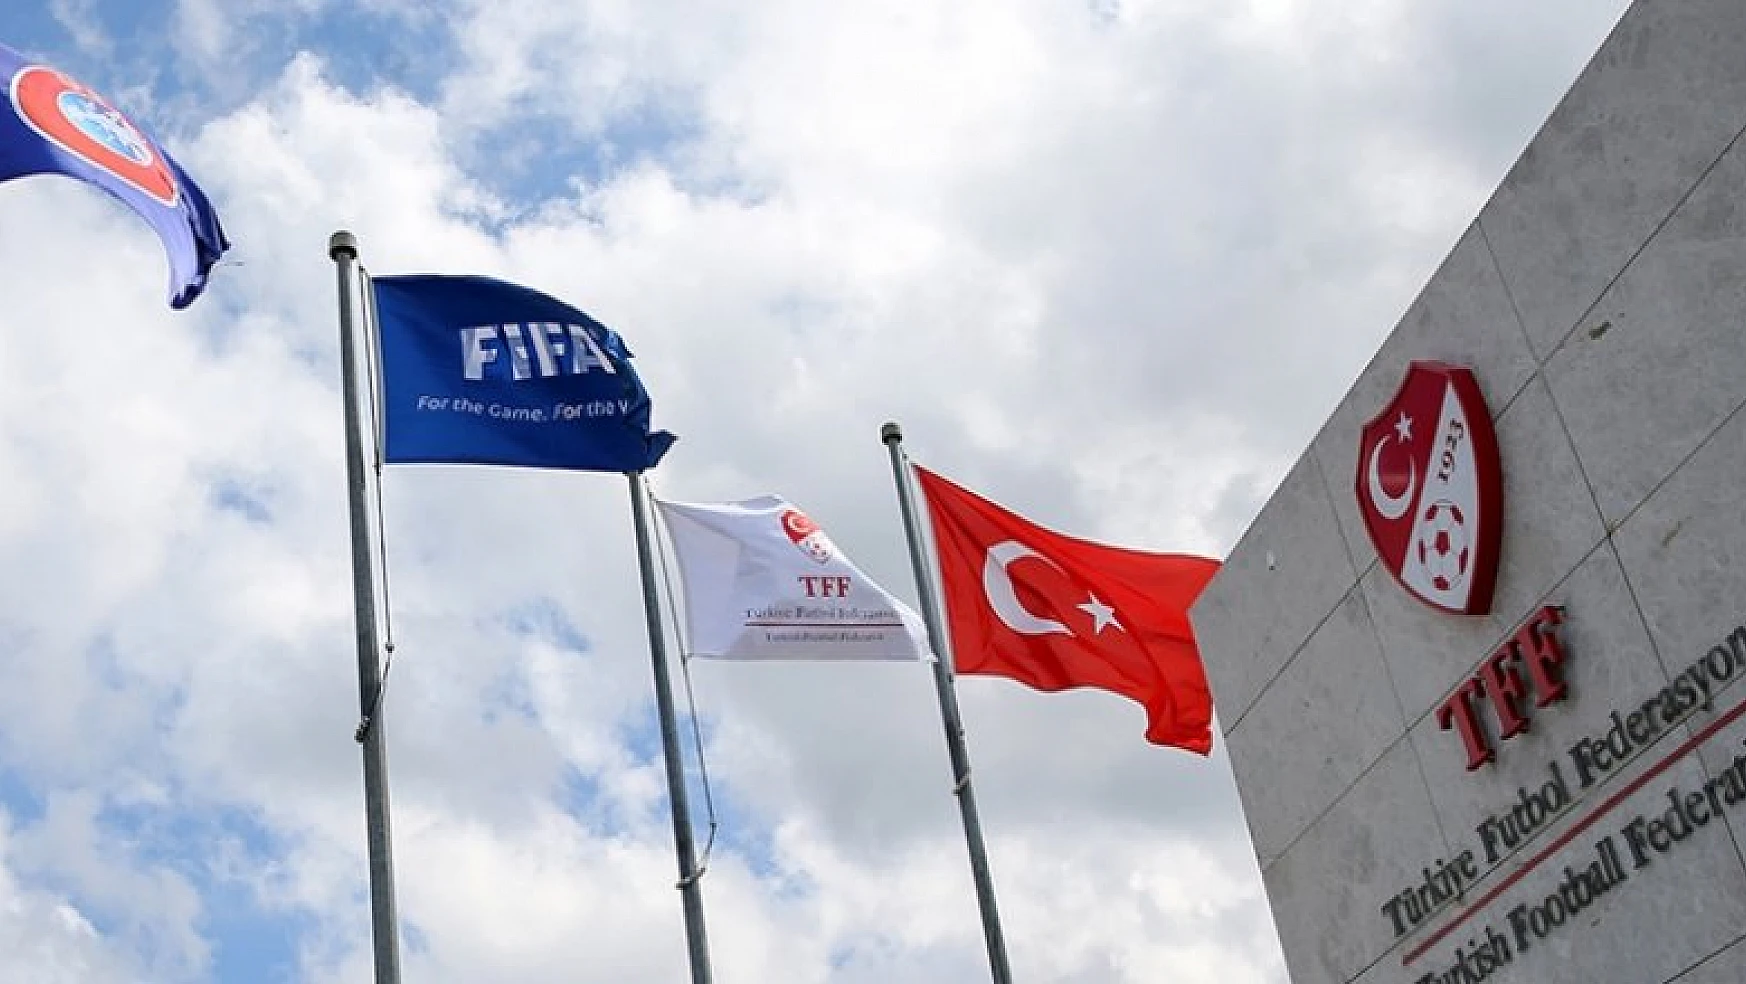 Süper Lig'den 8 kulüp PFDK'ye sevk edildi